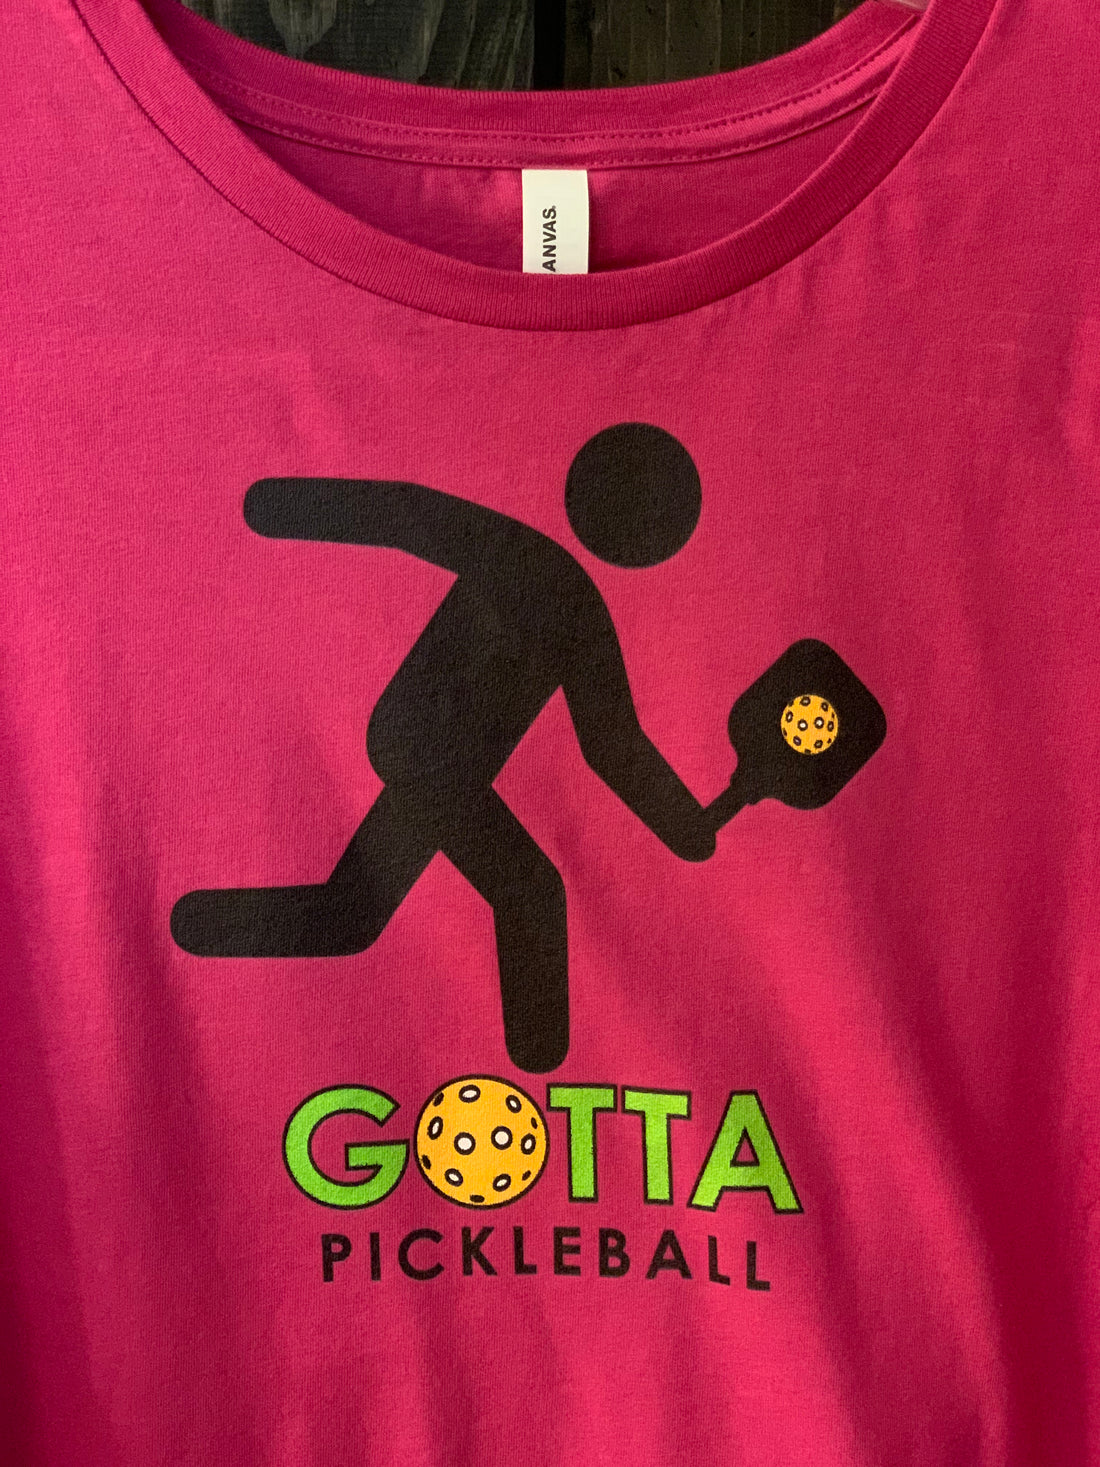 New Ozzie pickleball t-shirt...